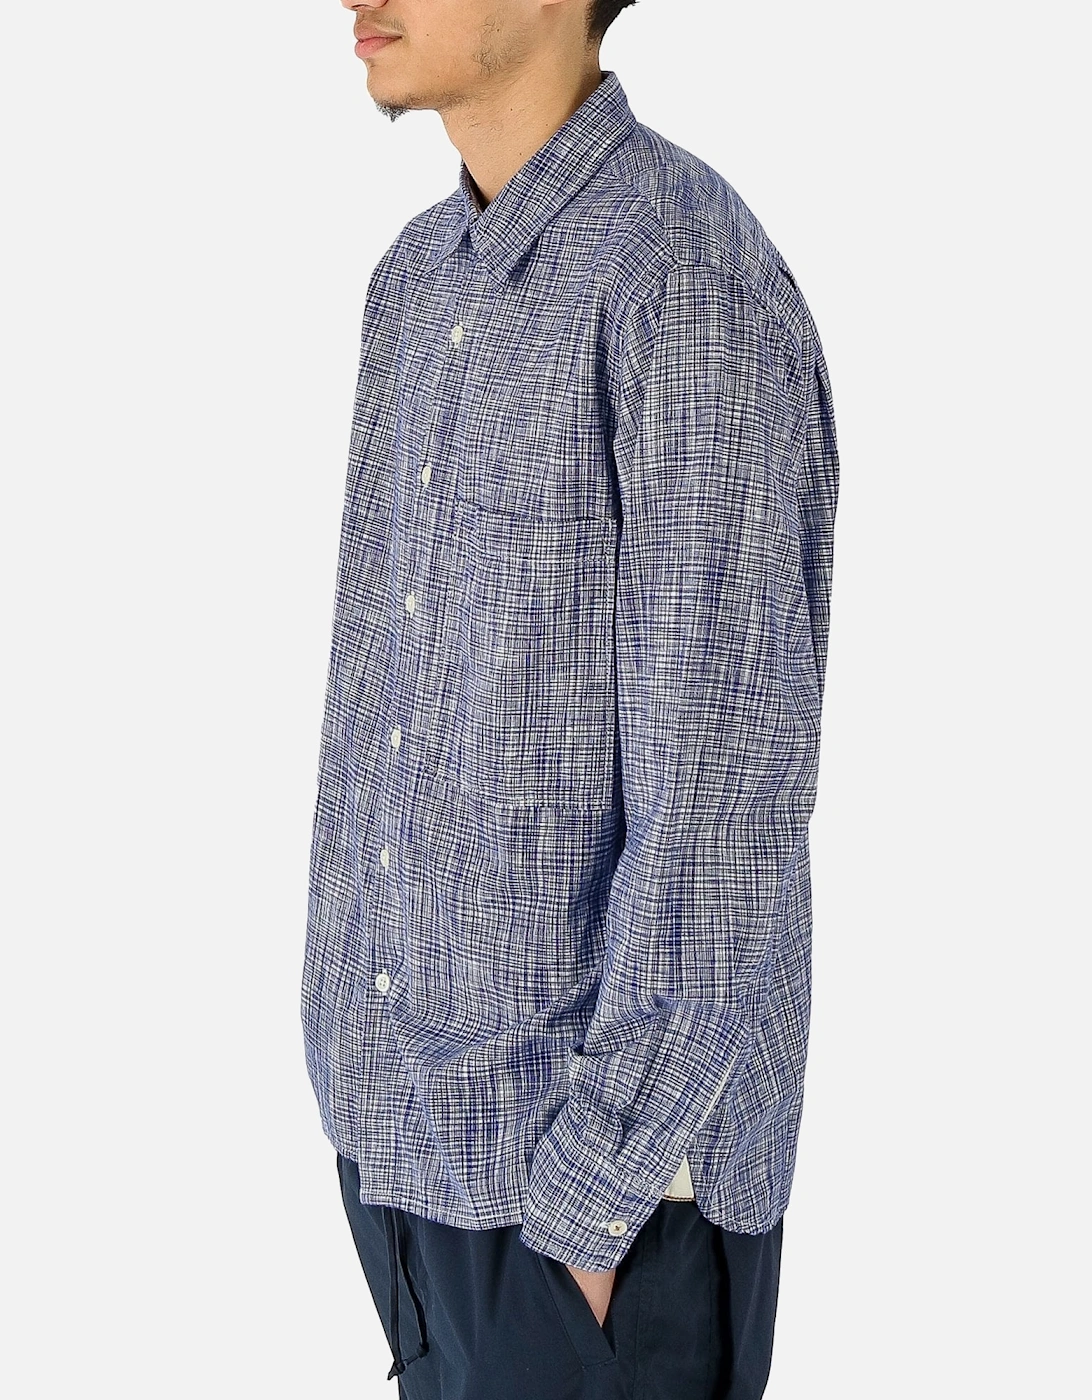 Square Pocket Woven Fleck Navy Shirt